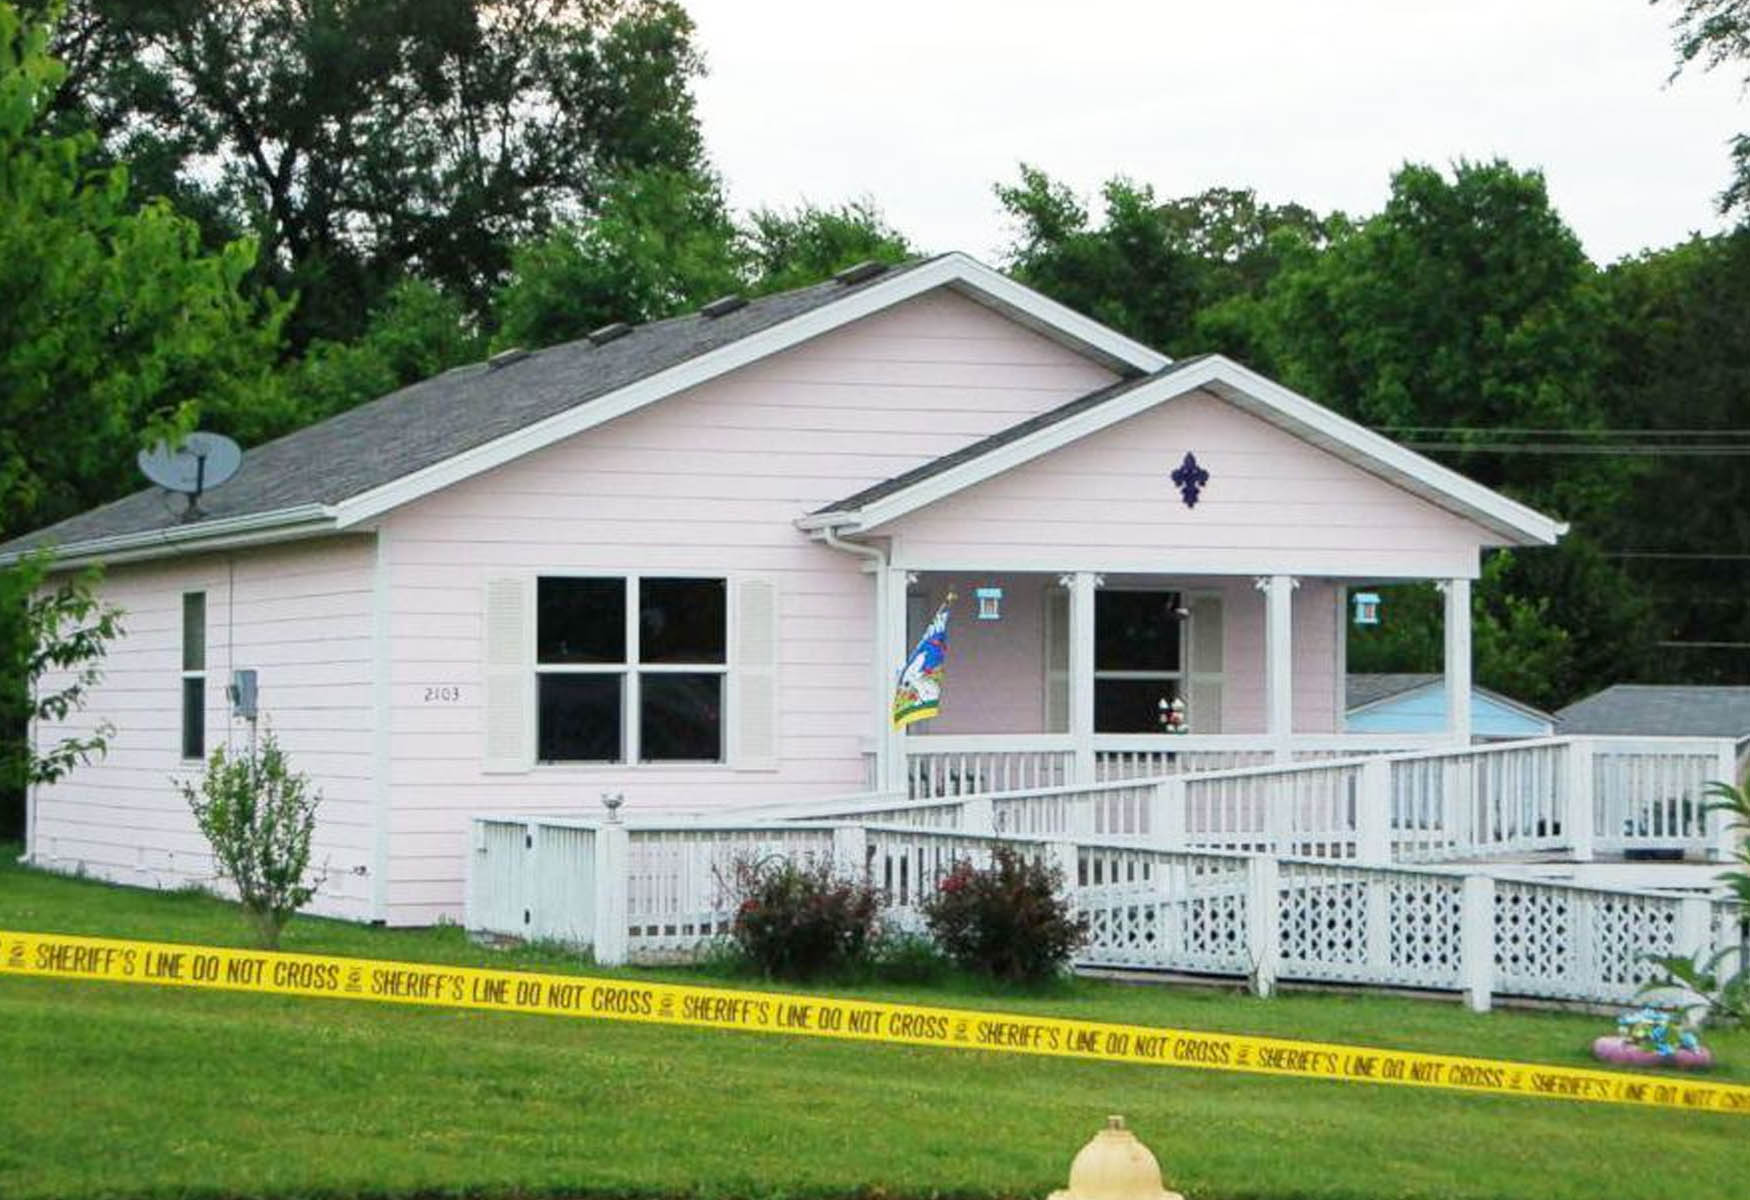 Gypsy Rose Blanchard Murder House Draws Tourists, Angers Neighbors